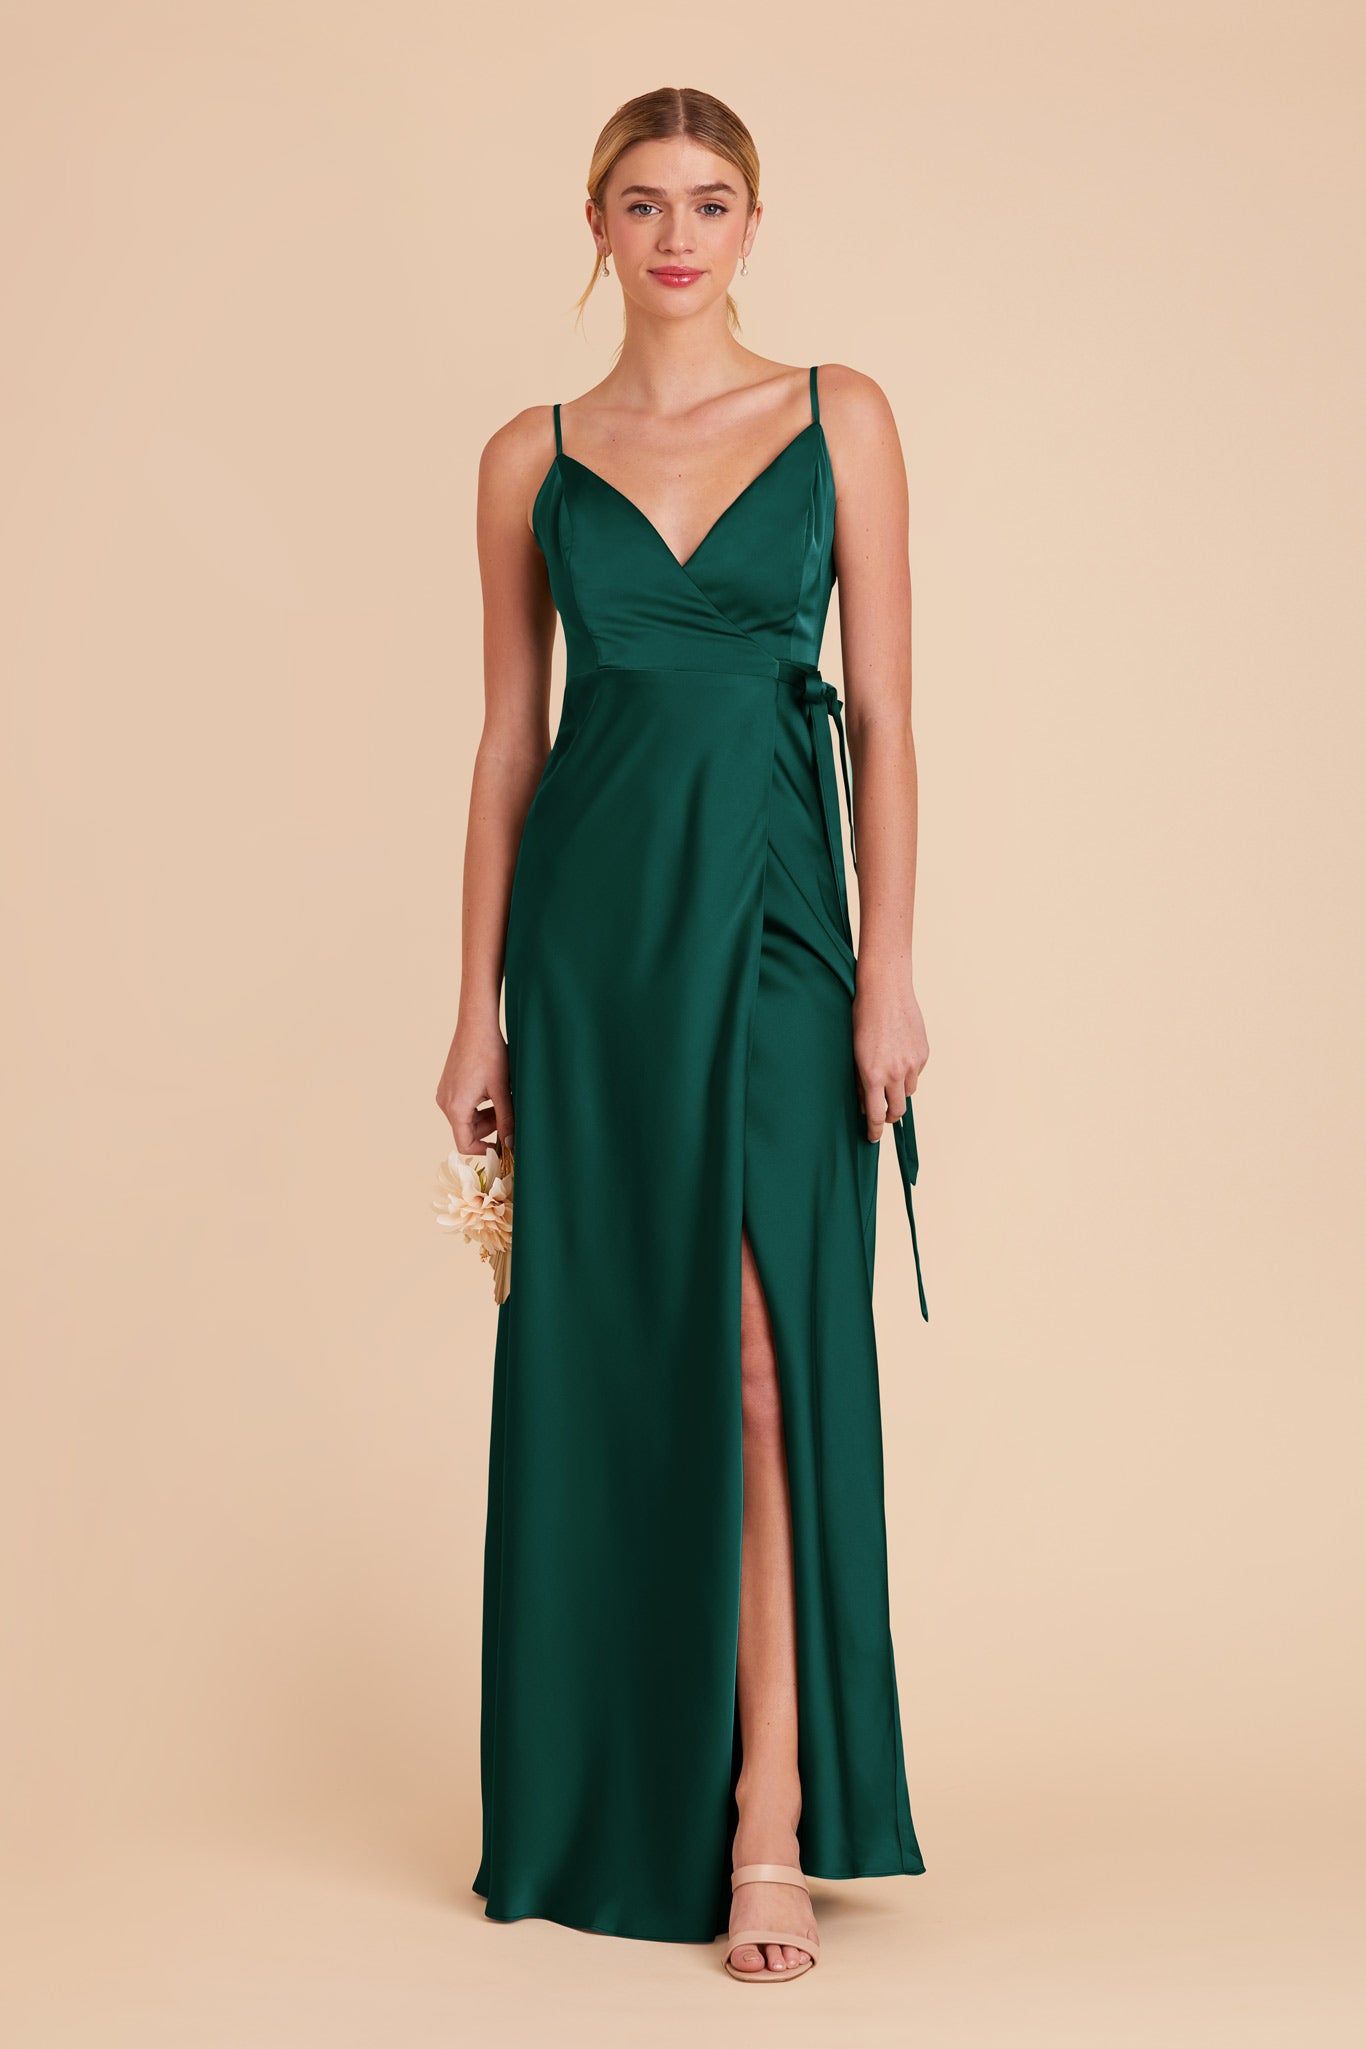 Emerald Cindy Matte Satin Dress by Birdy Grey